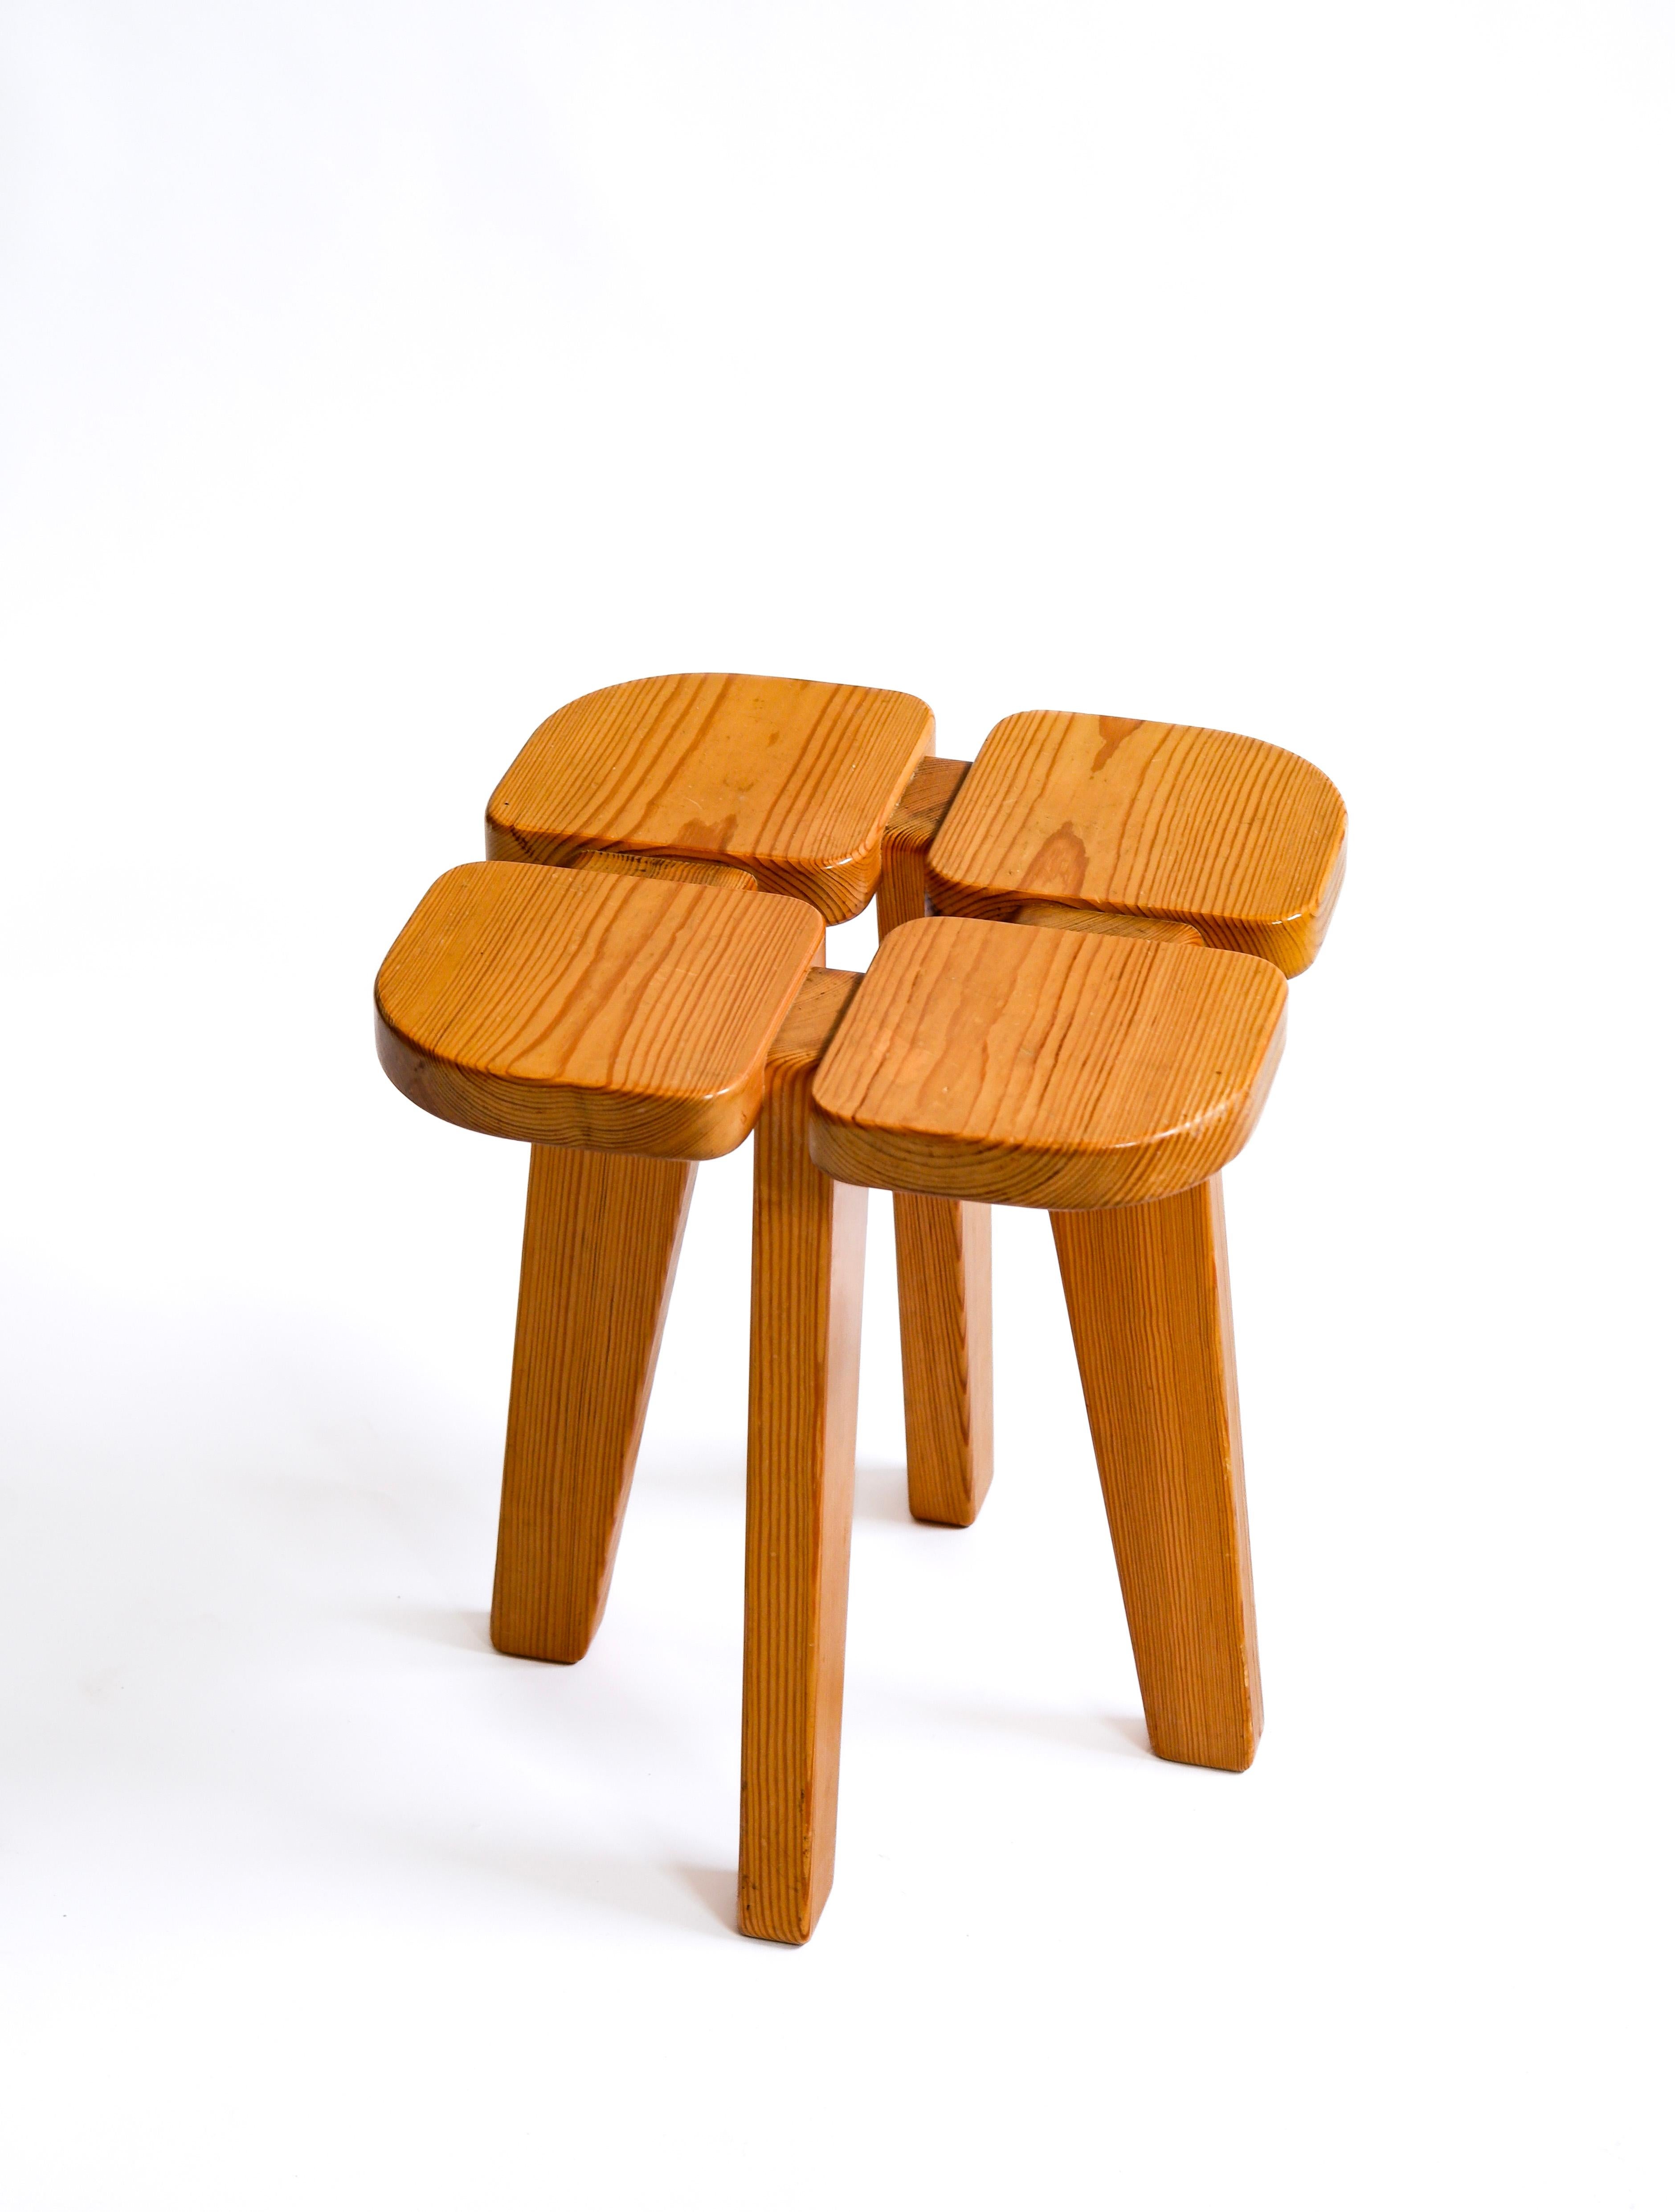 Pine Lisa Johansson-Pape, Apila stool, pine circa 1960 For Sale